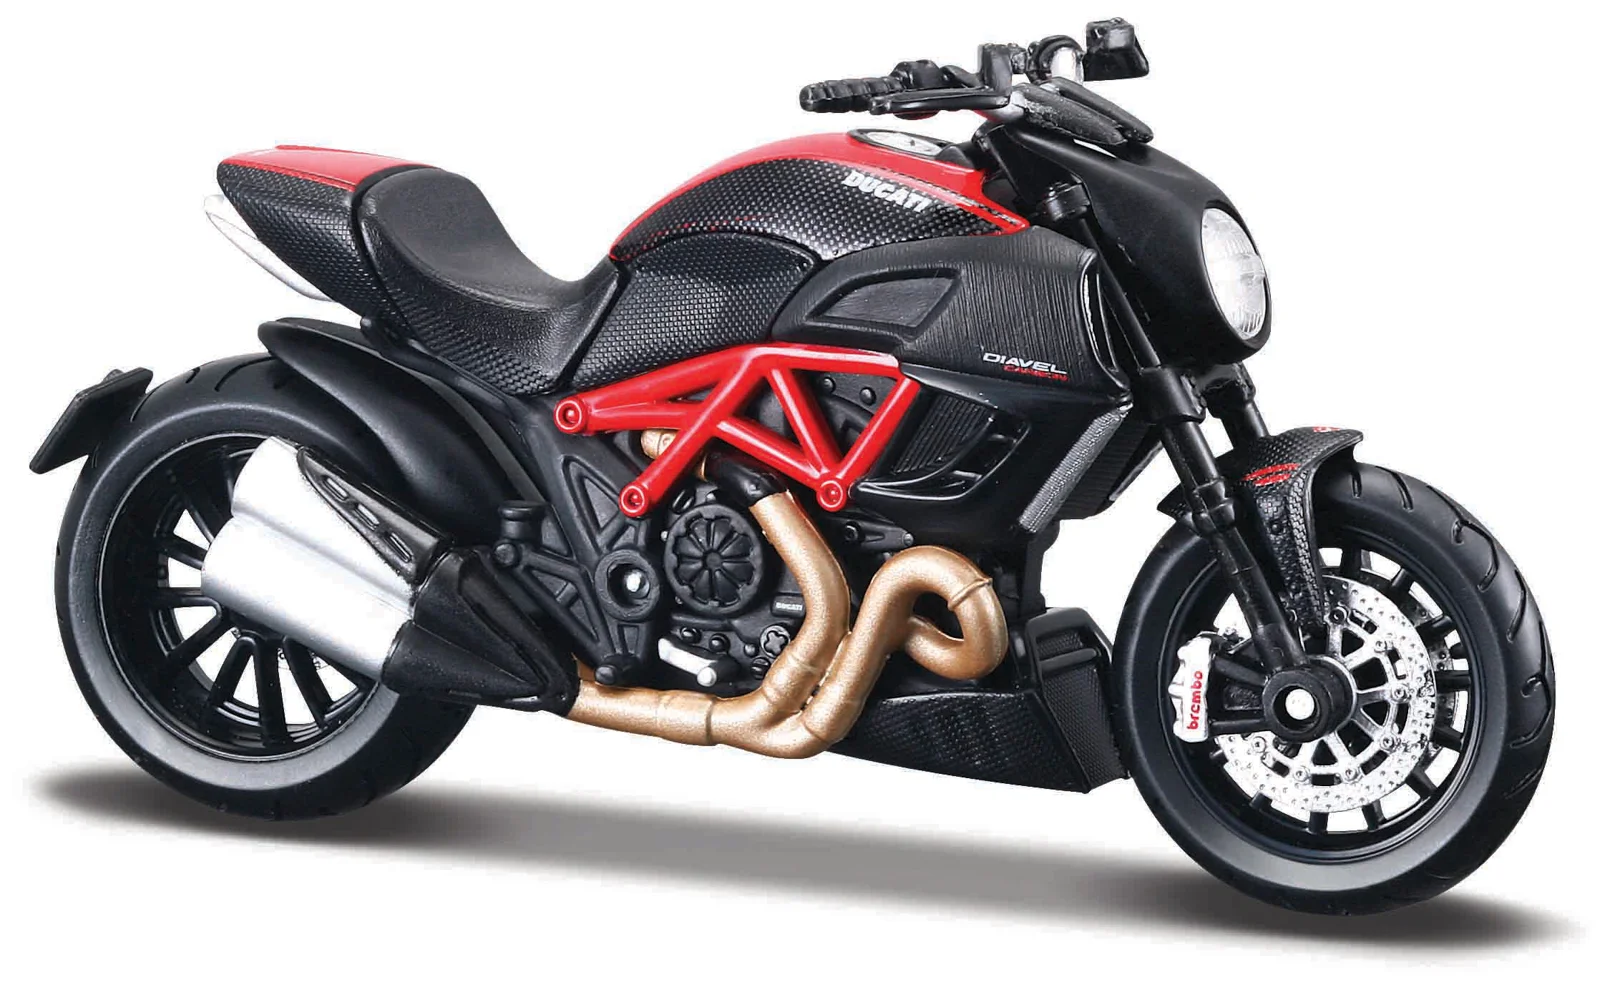 Maisto - Motocykl, DUCATI Diavel Carbon, červeno-černá, 1:18, blister box